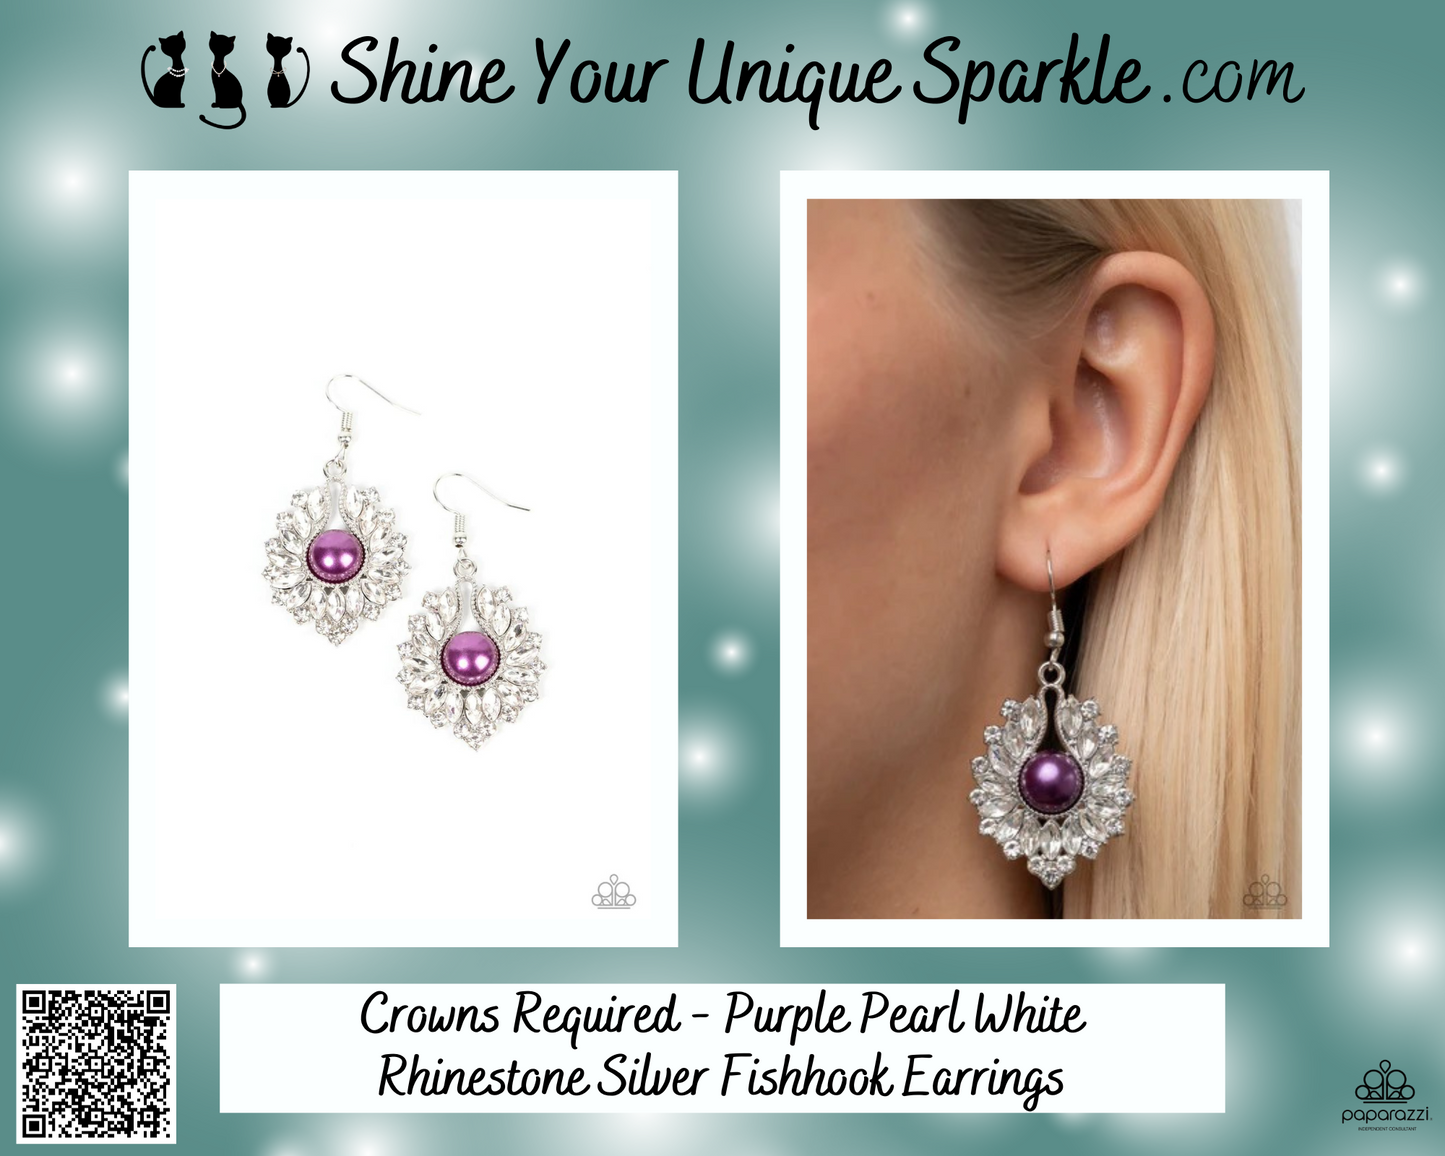 Crowns Required - Purple Pearl White Rhinestone Silver Fishhook Earrings